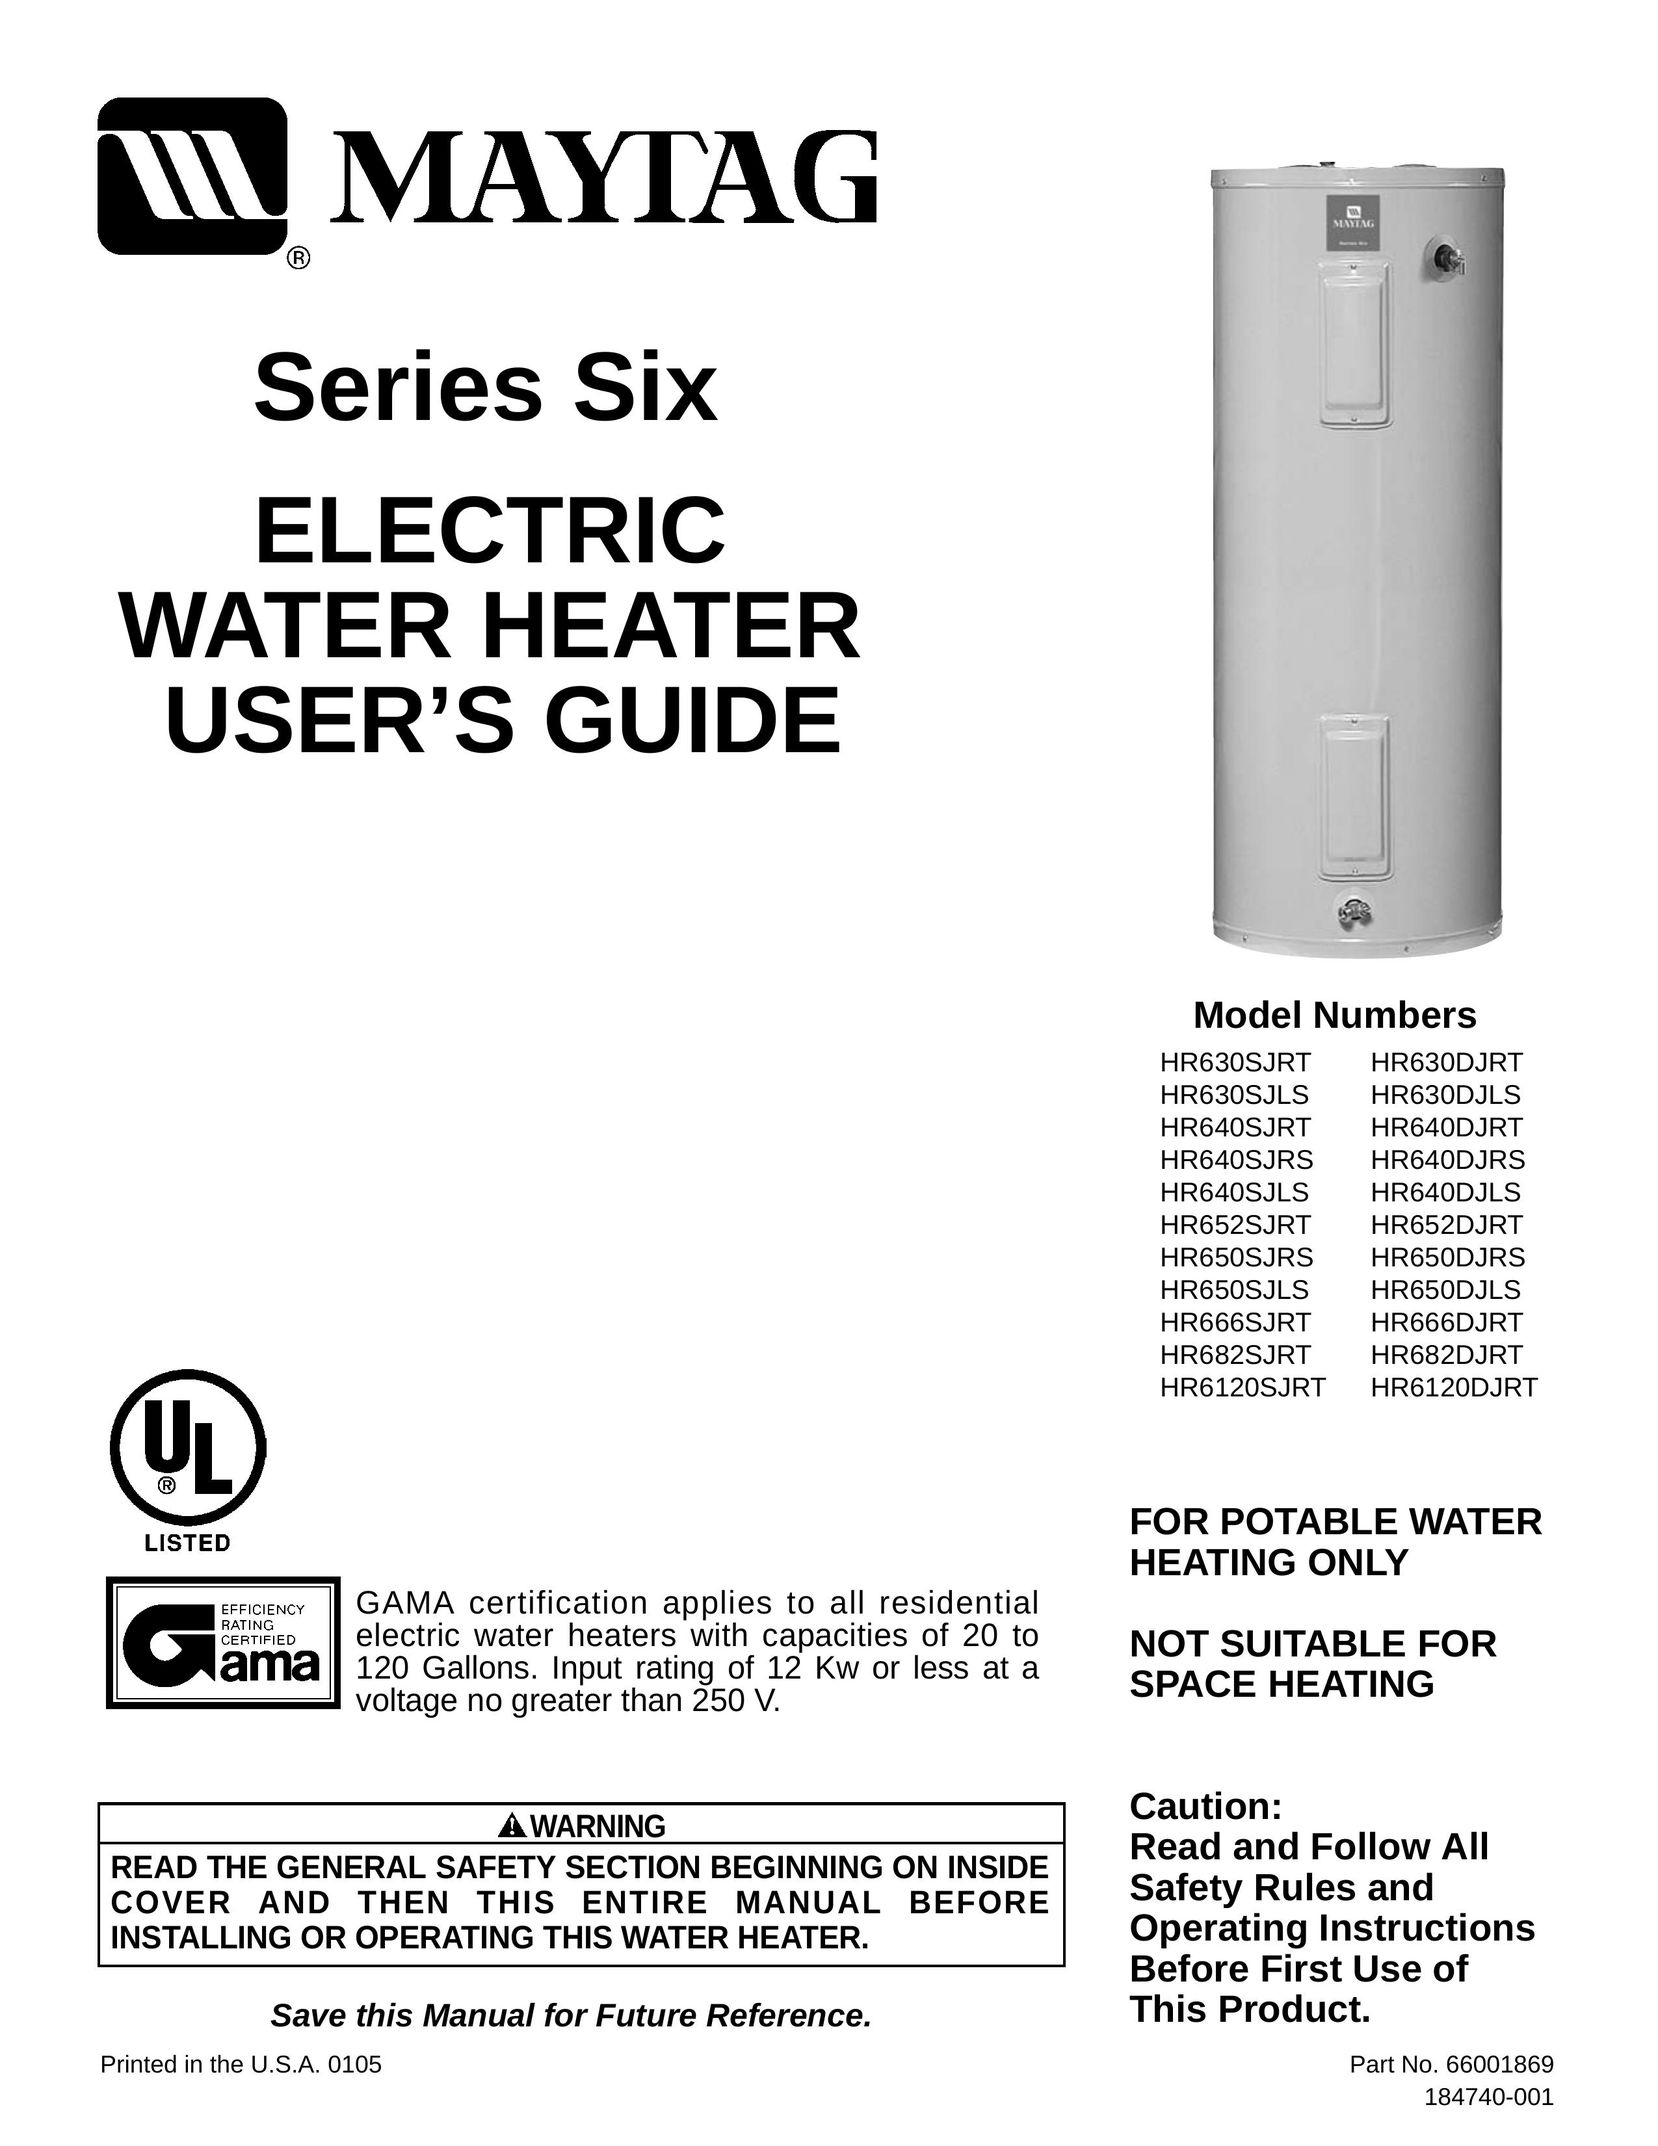 Maytag HR650DJLS Water Heater User Manual